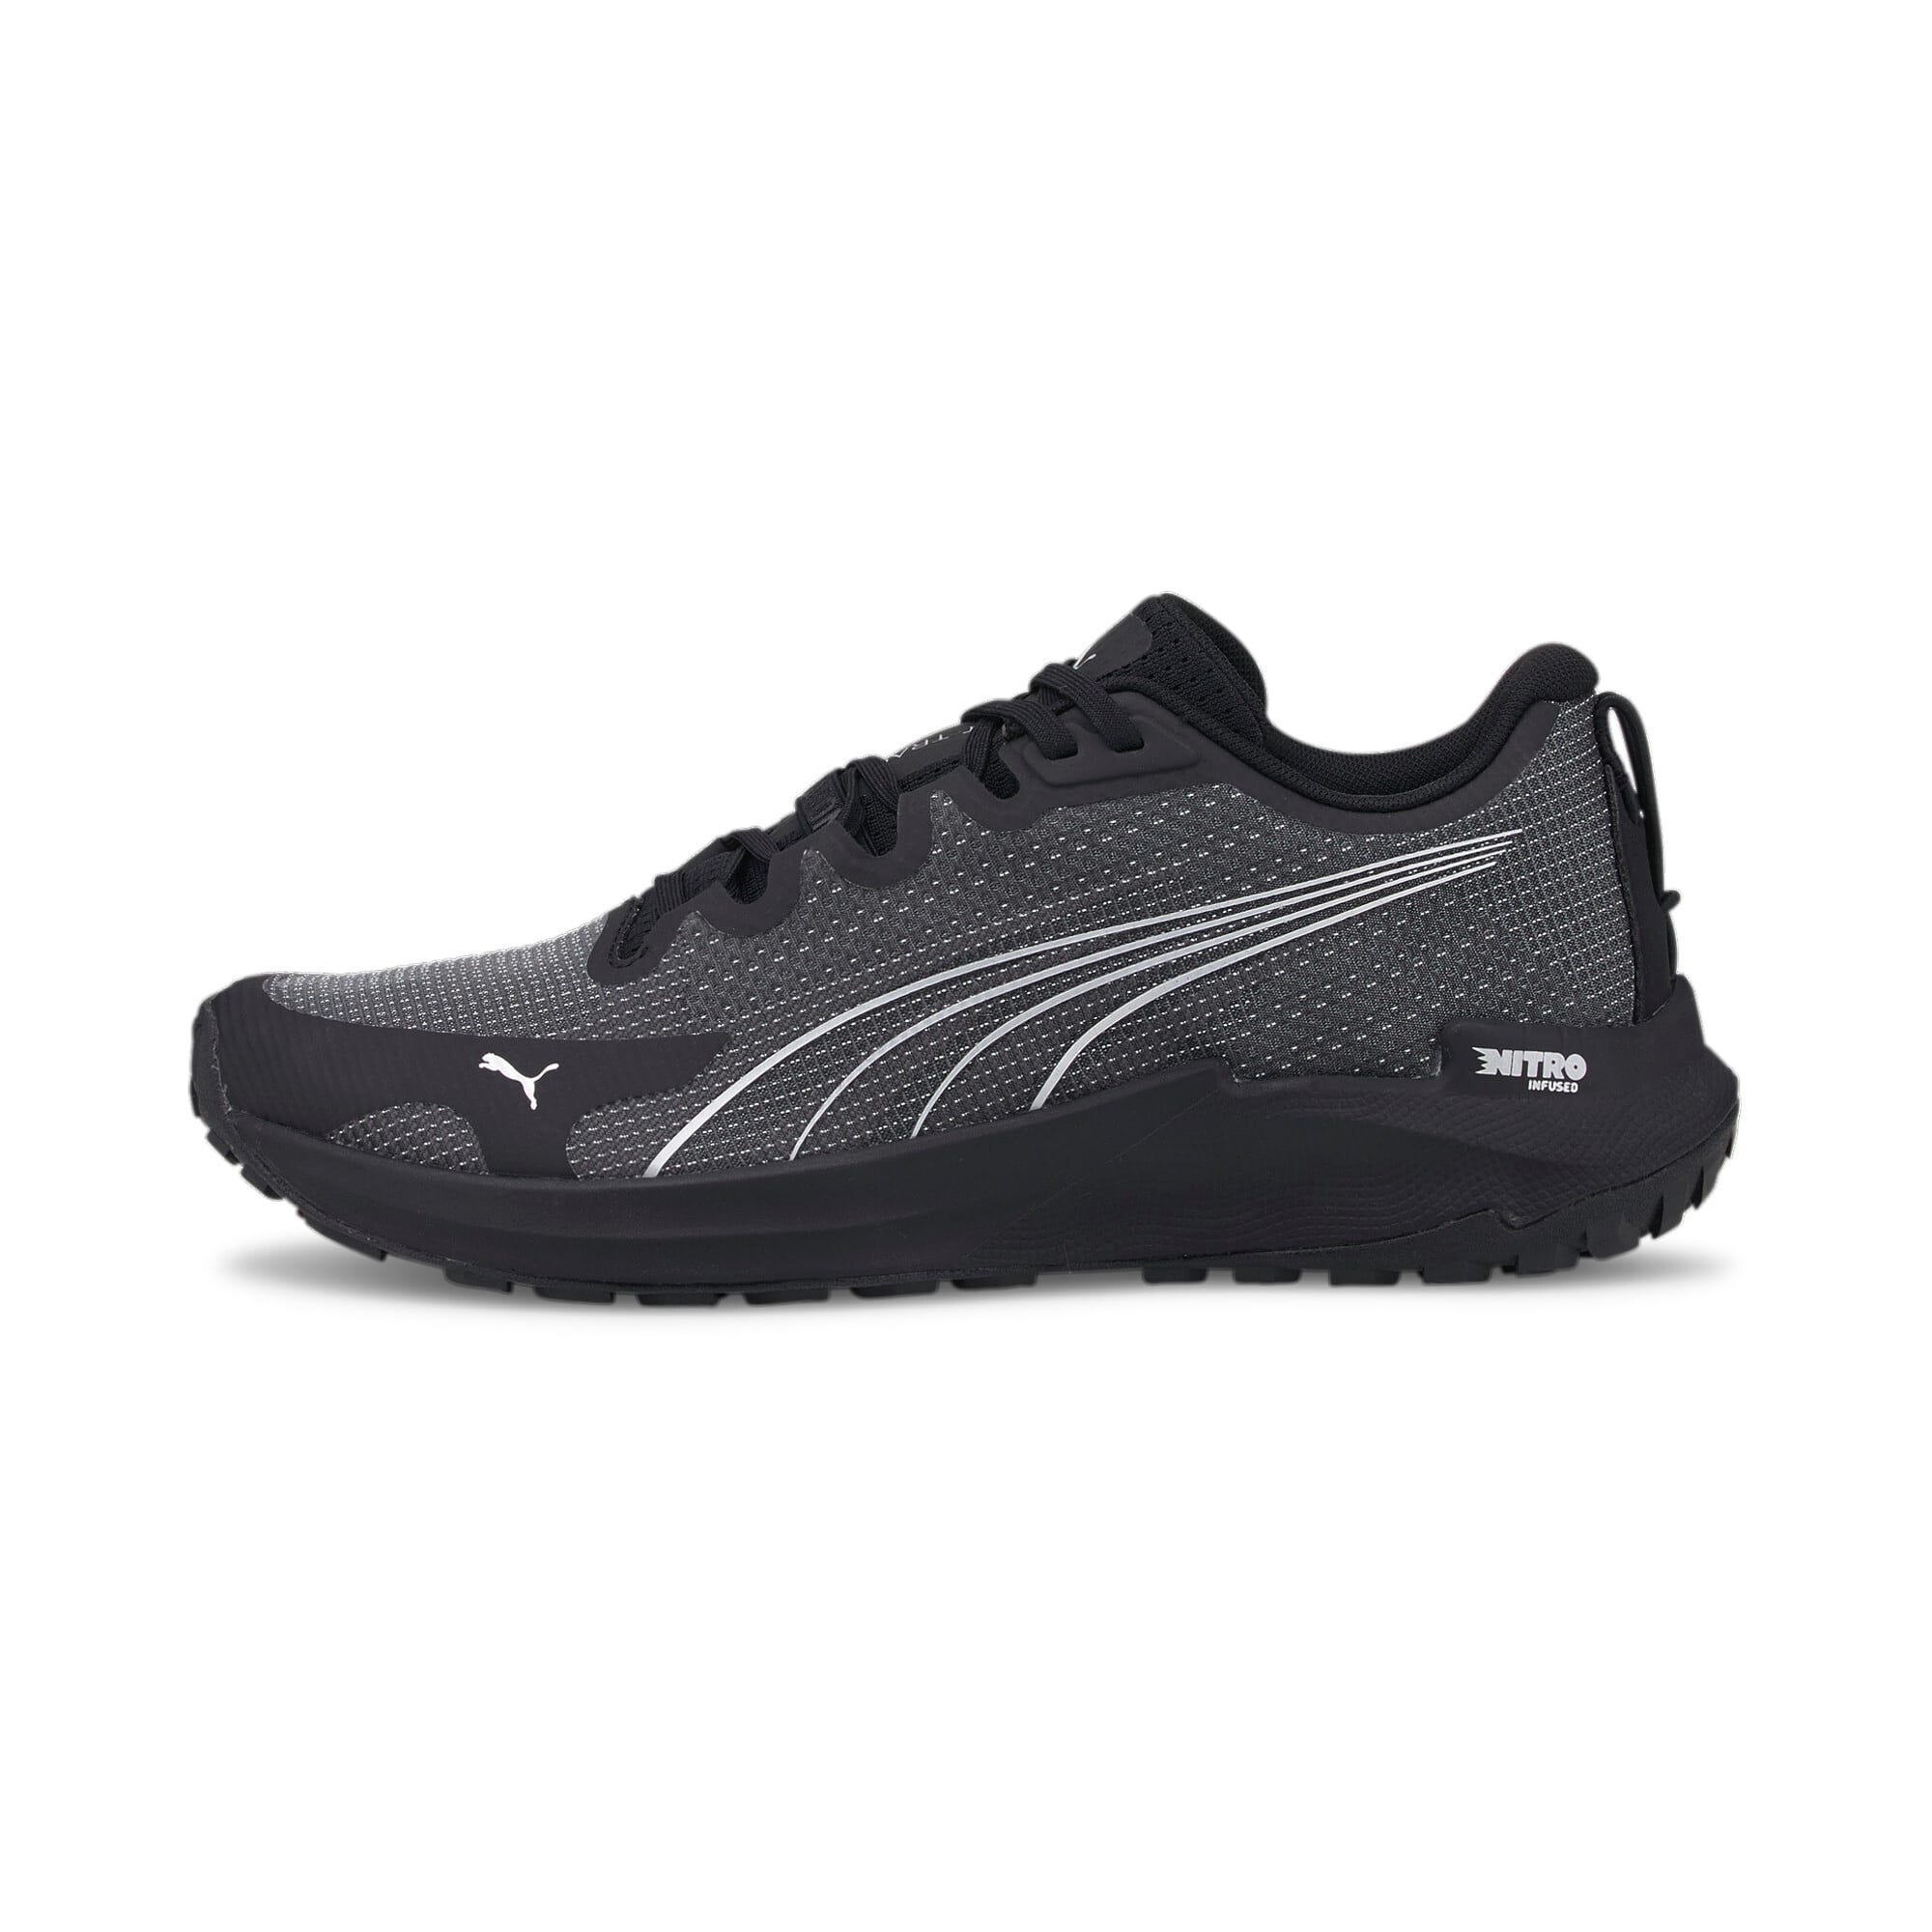 Fast-Trac NITRO™ Men's Trail Running Shoes | PUMA